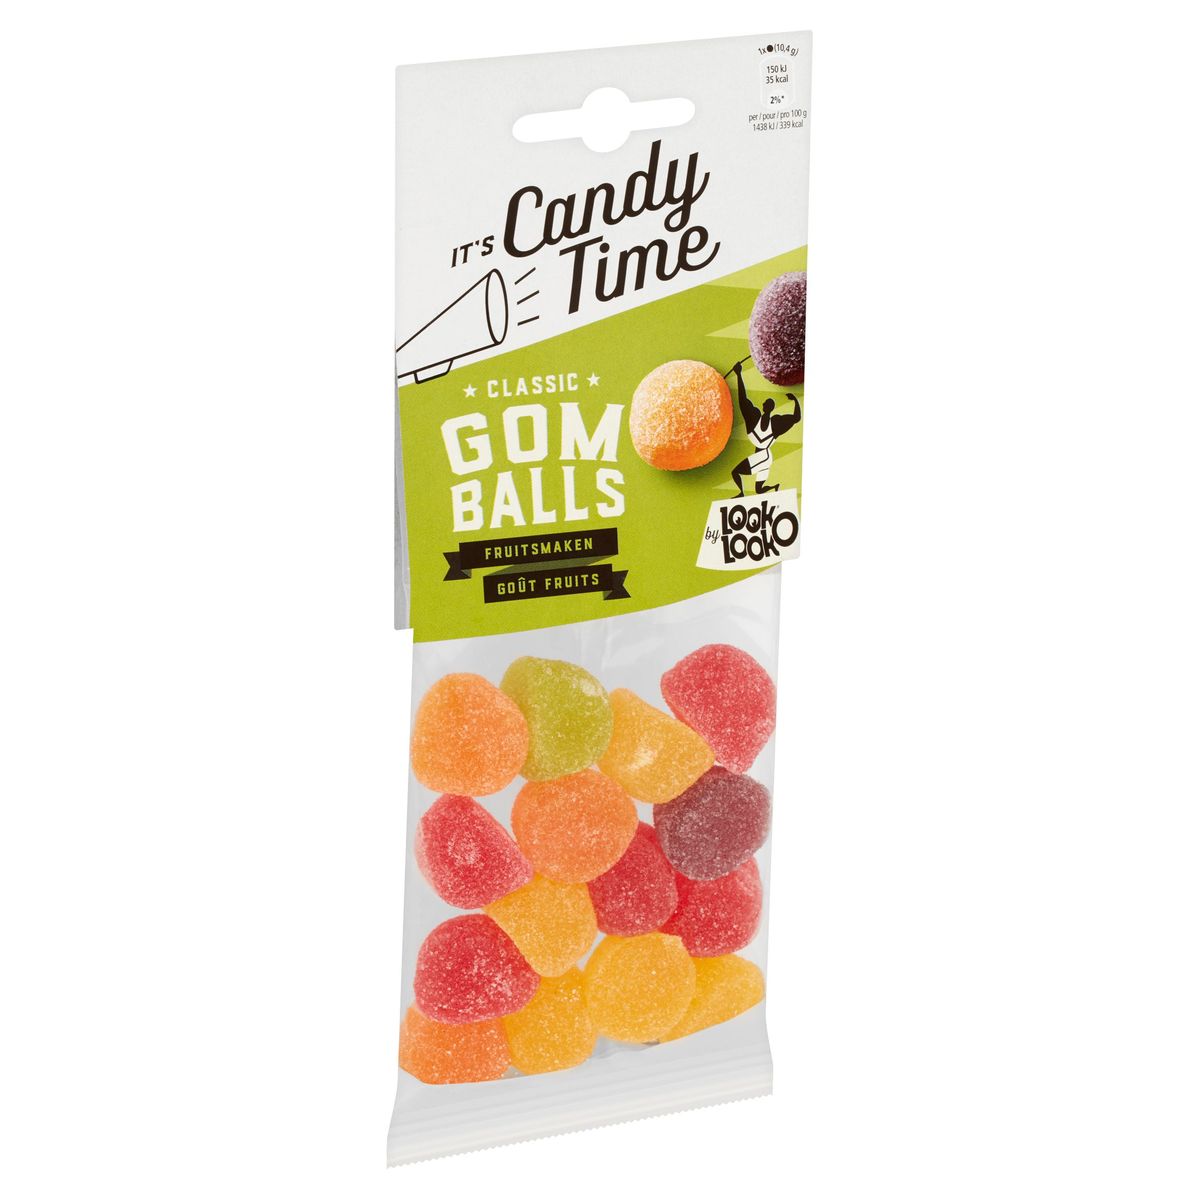 Candy Time Classic Gom Balls Fruitsmaken 160 g